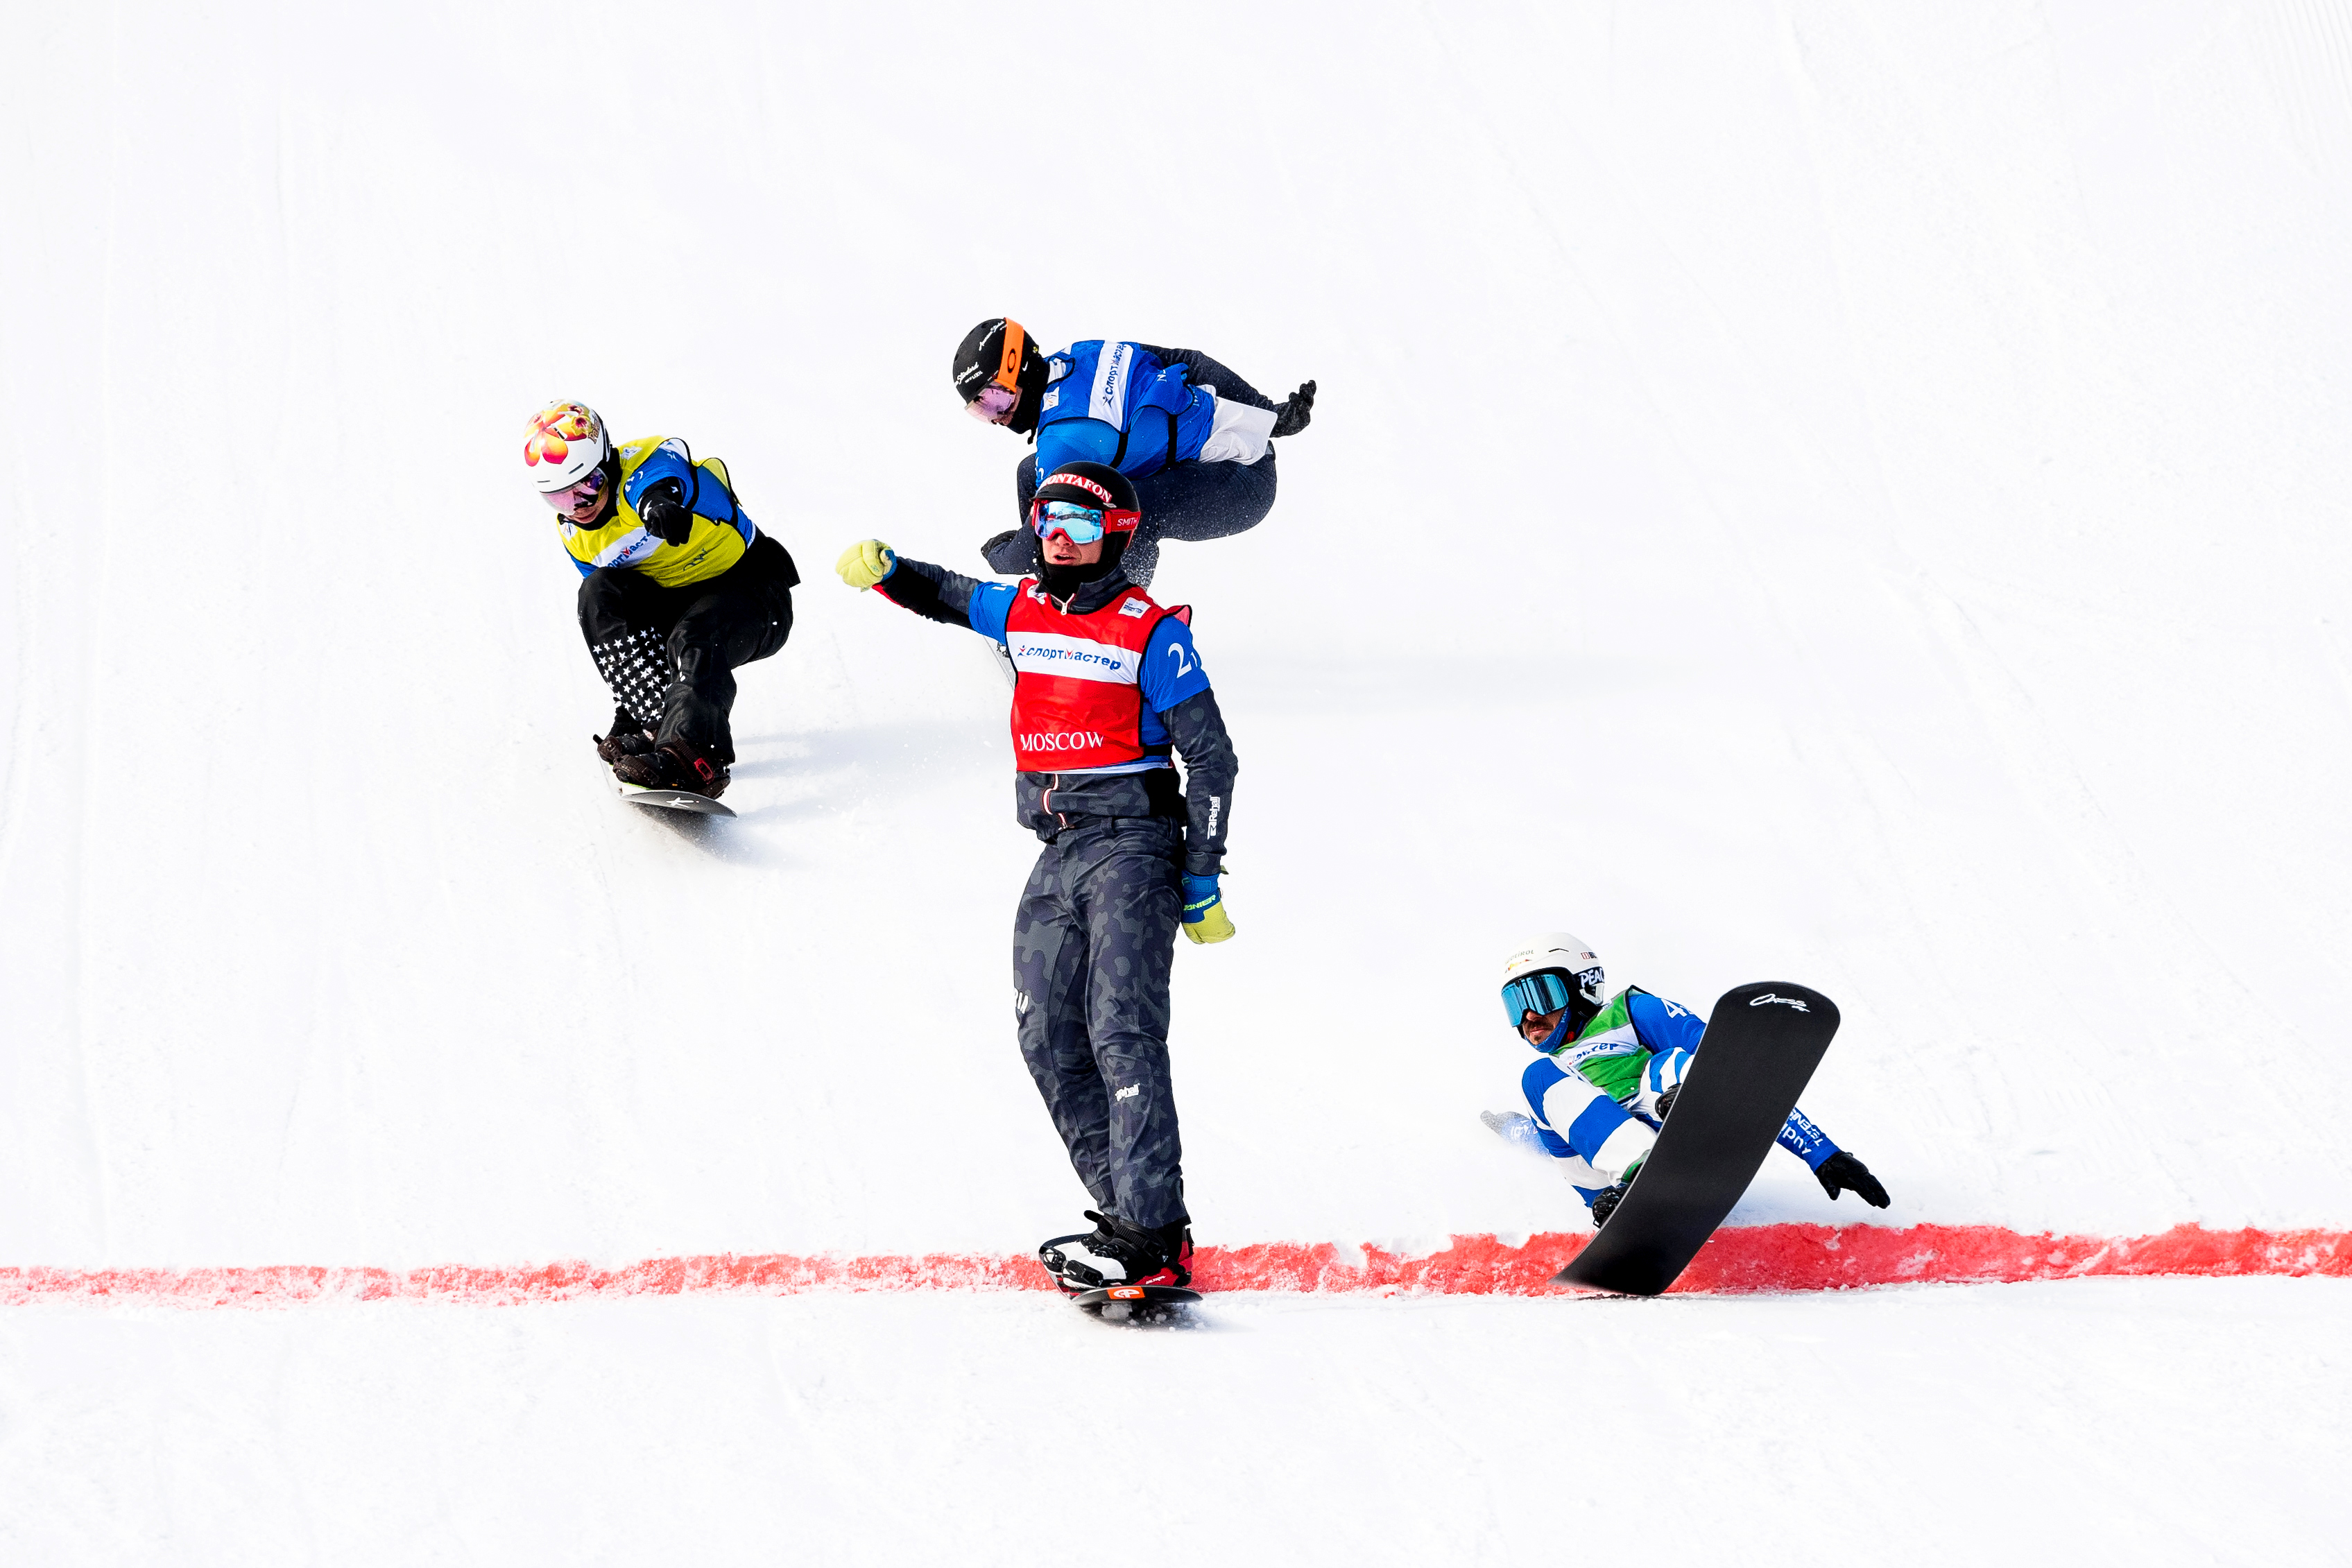 FIS Snowboard World Cup - Moscow - Team SBX - © Miha Matavz/FIS